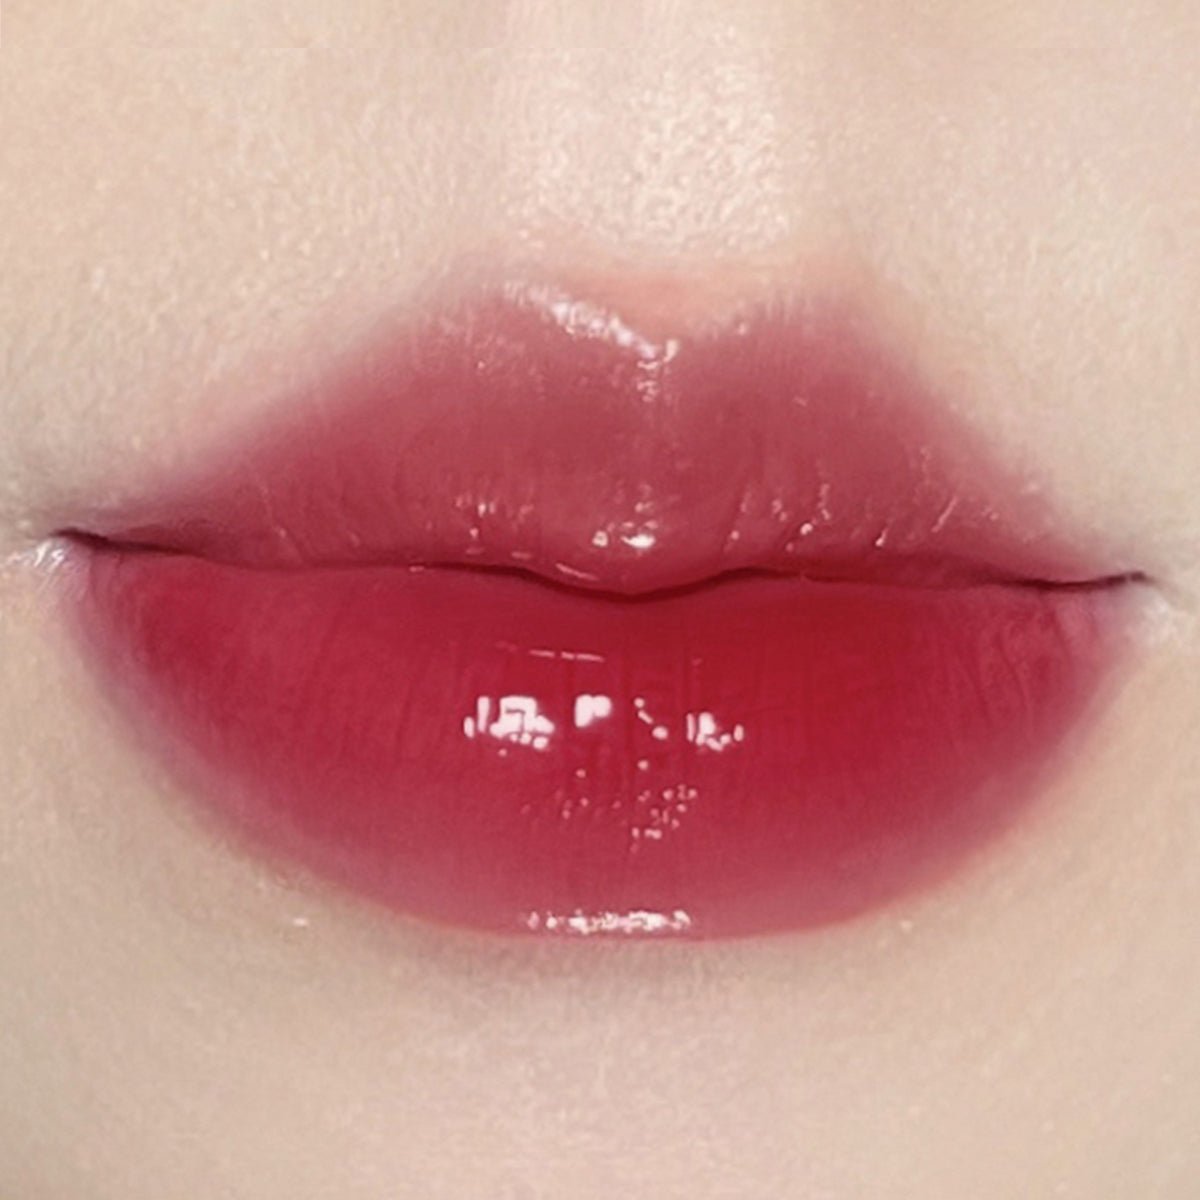 Colorkey Watery Lip Serum R020 Red - 0cm